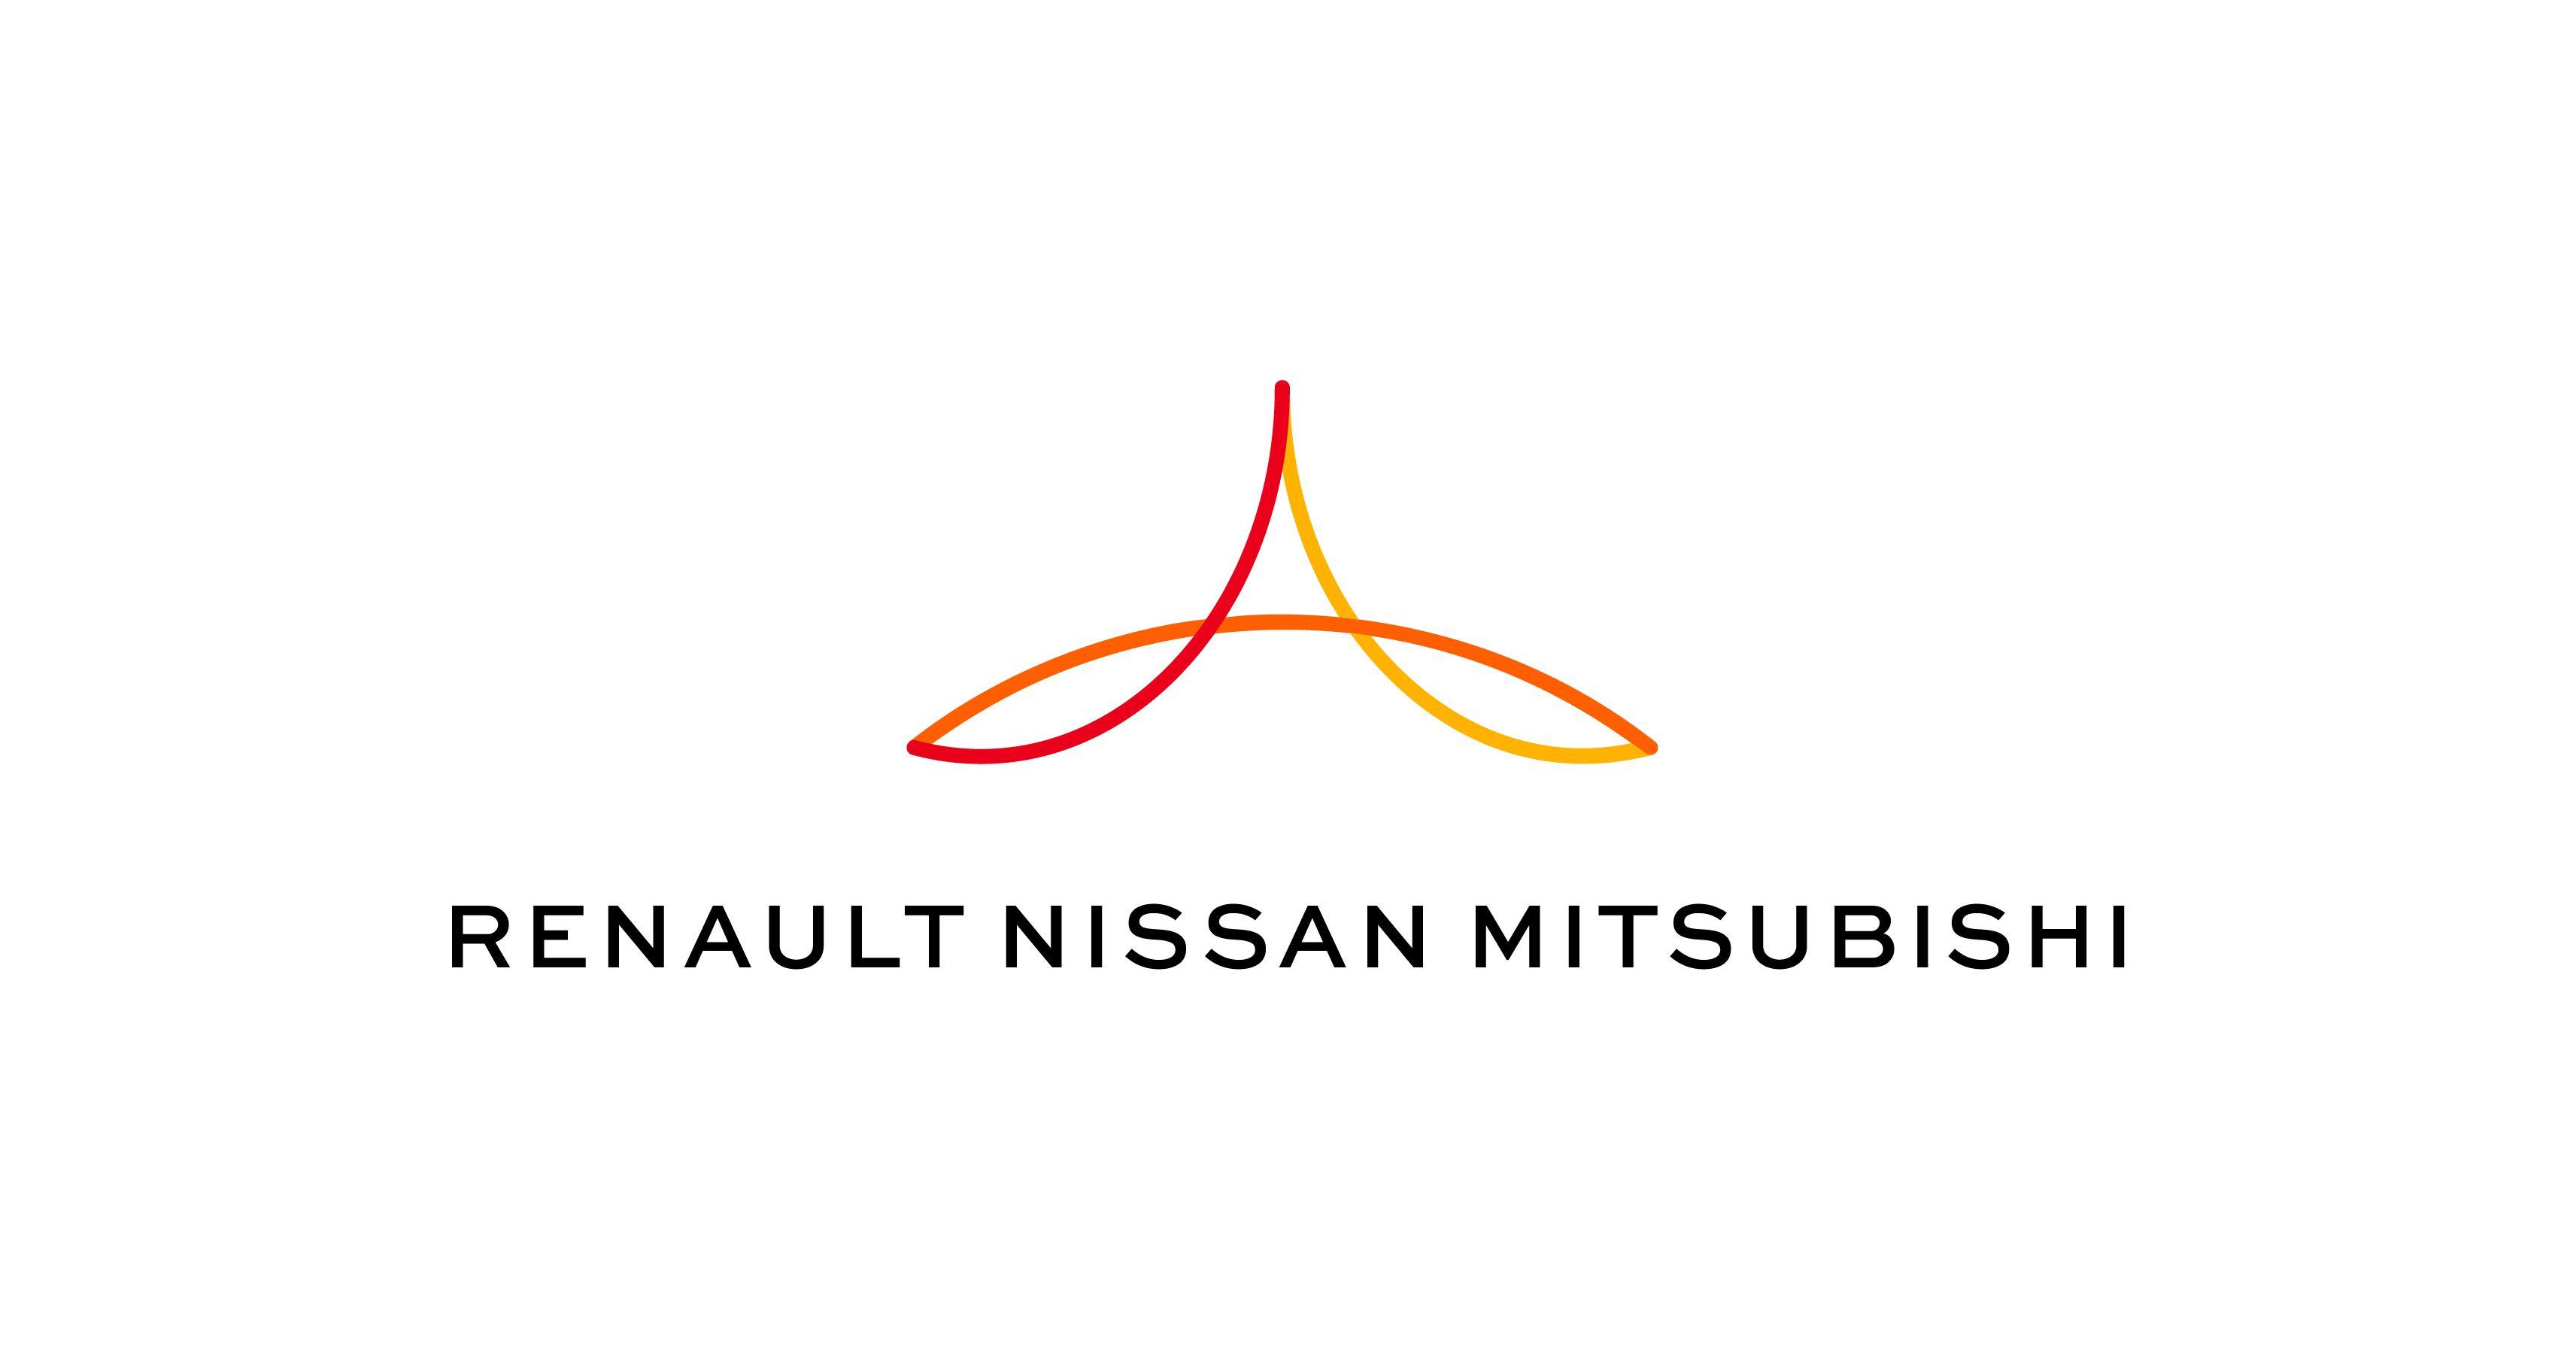 Didi Auto Logo - Renault Nissan Mitsubishi Joins DiDi Chuxing In DiDi Auto Alliance